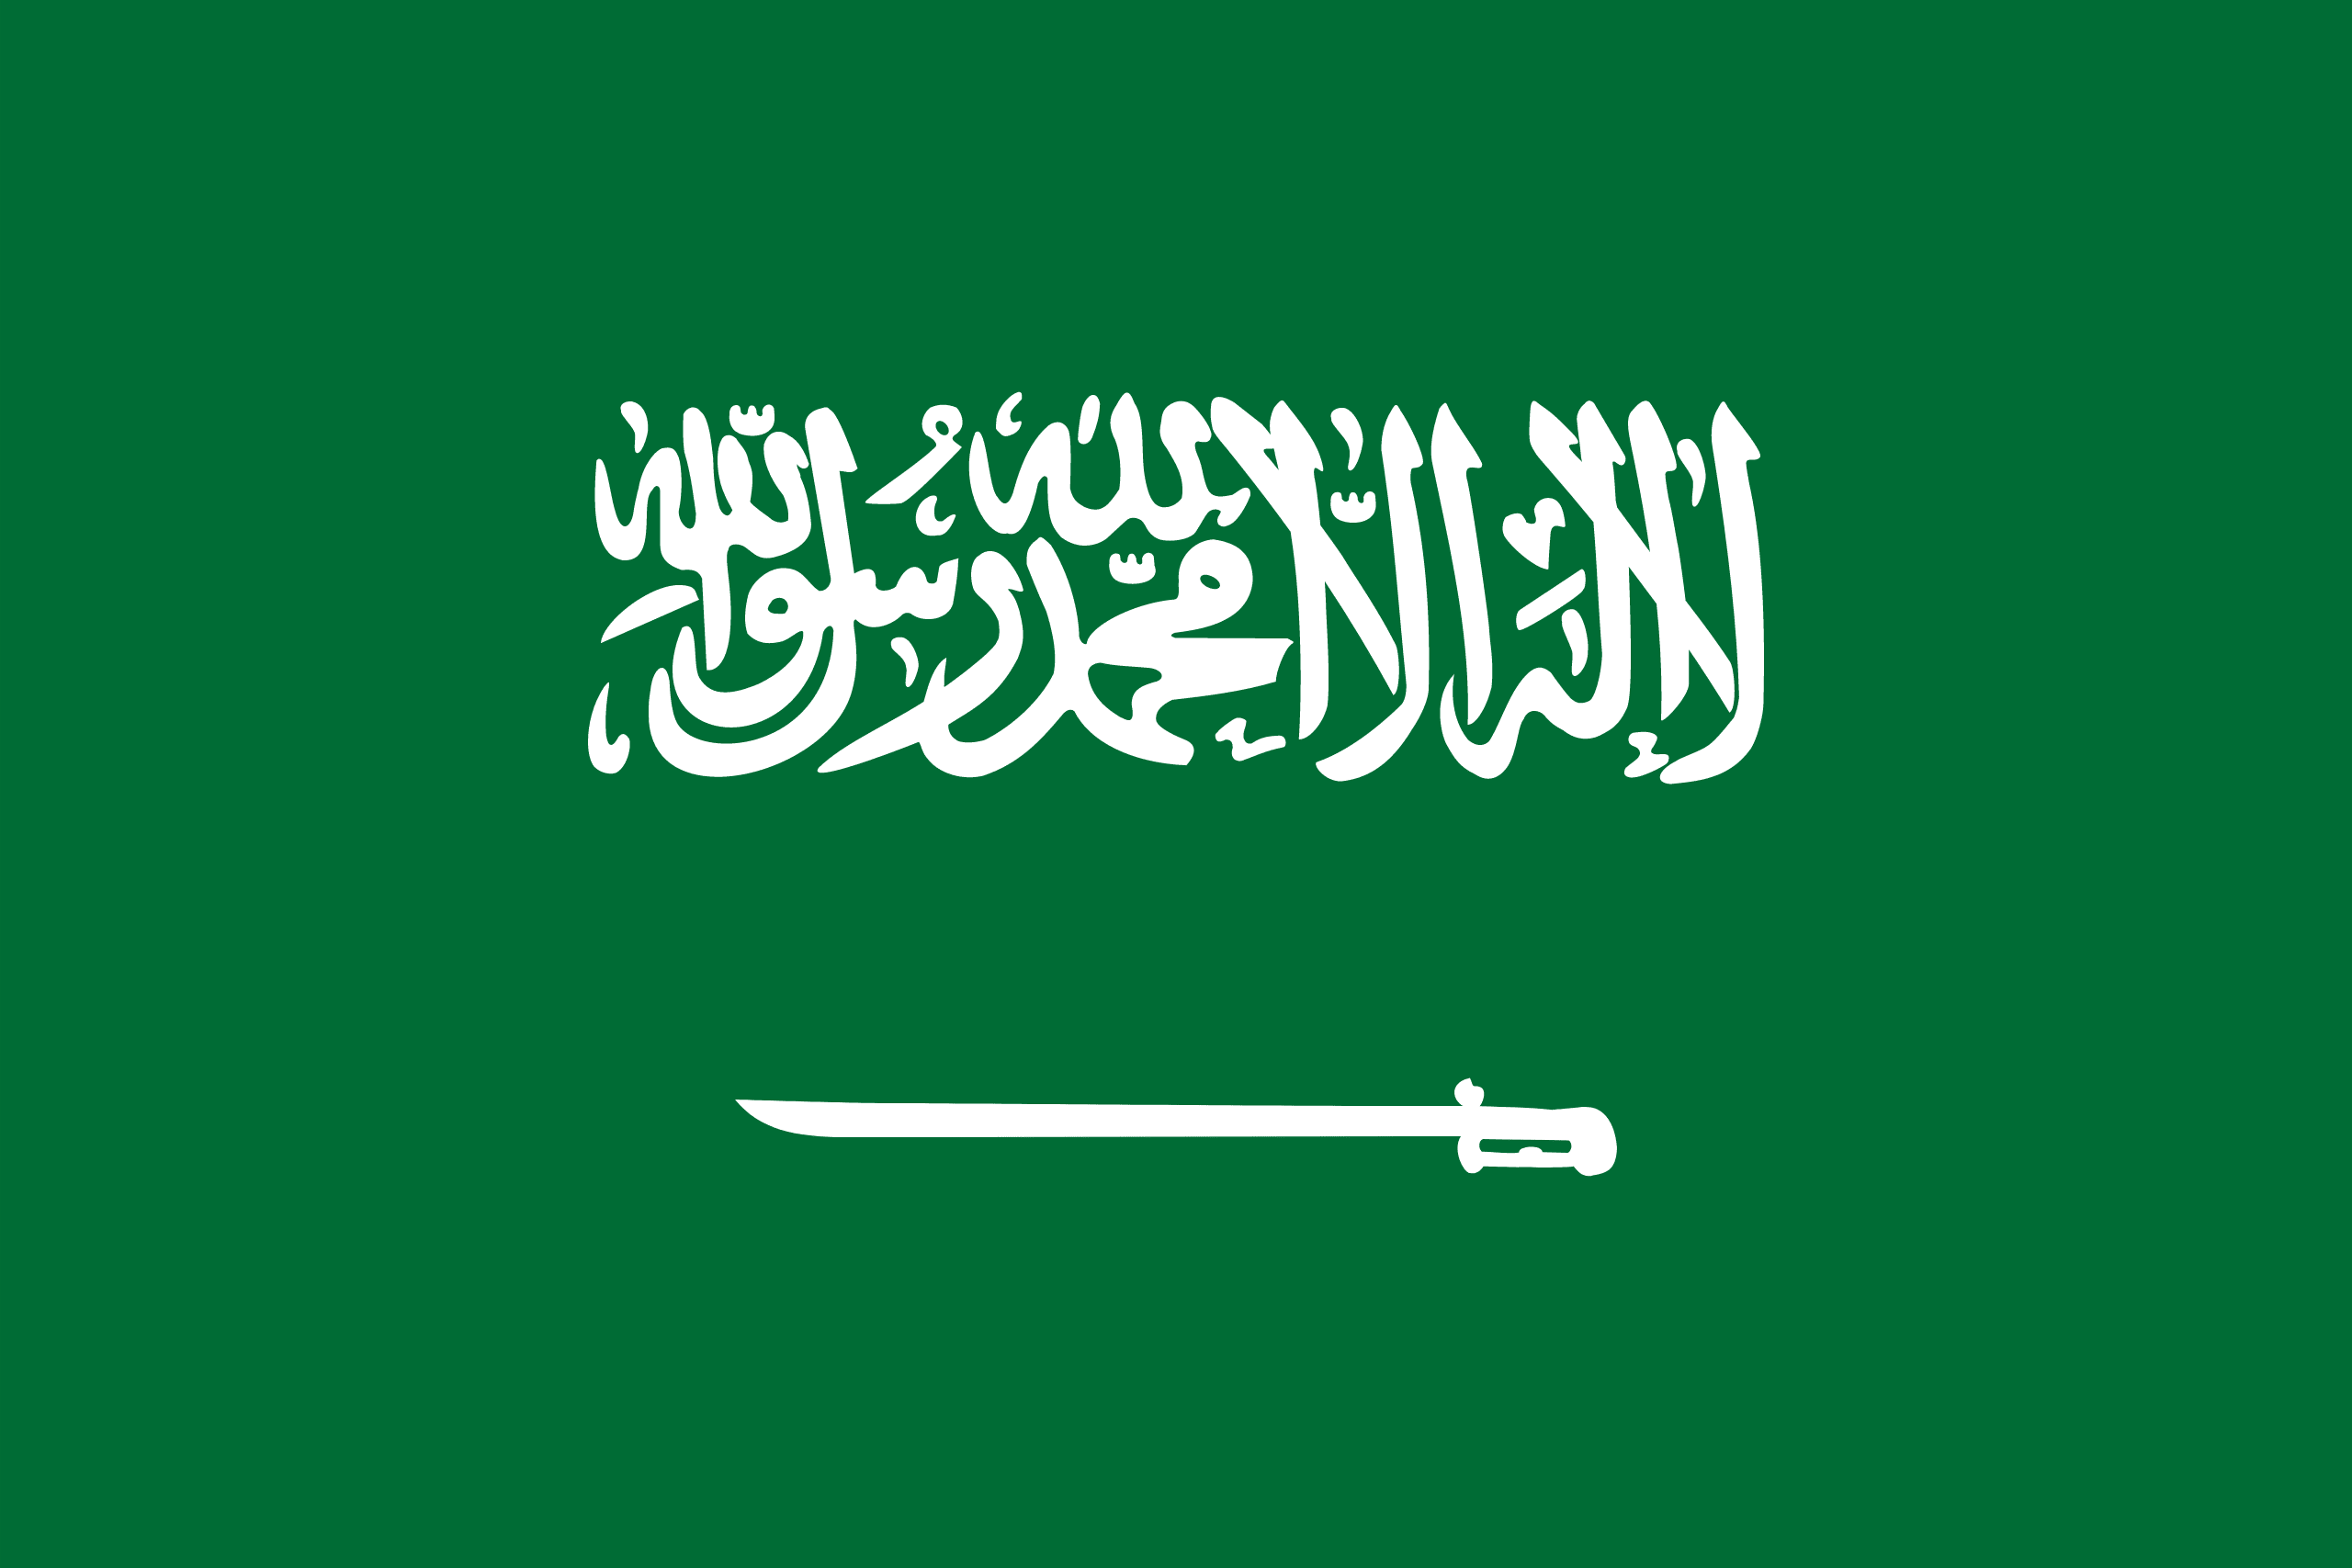 Arabic Flag